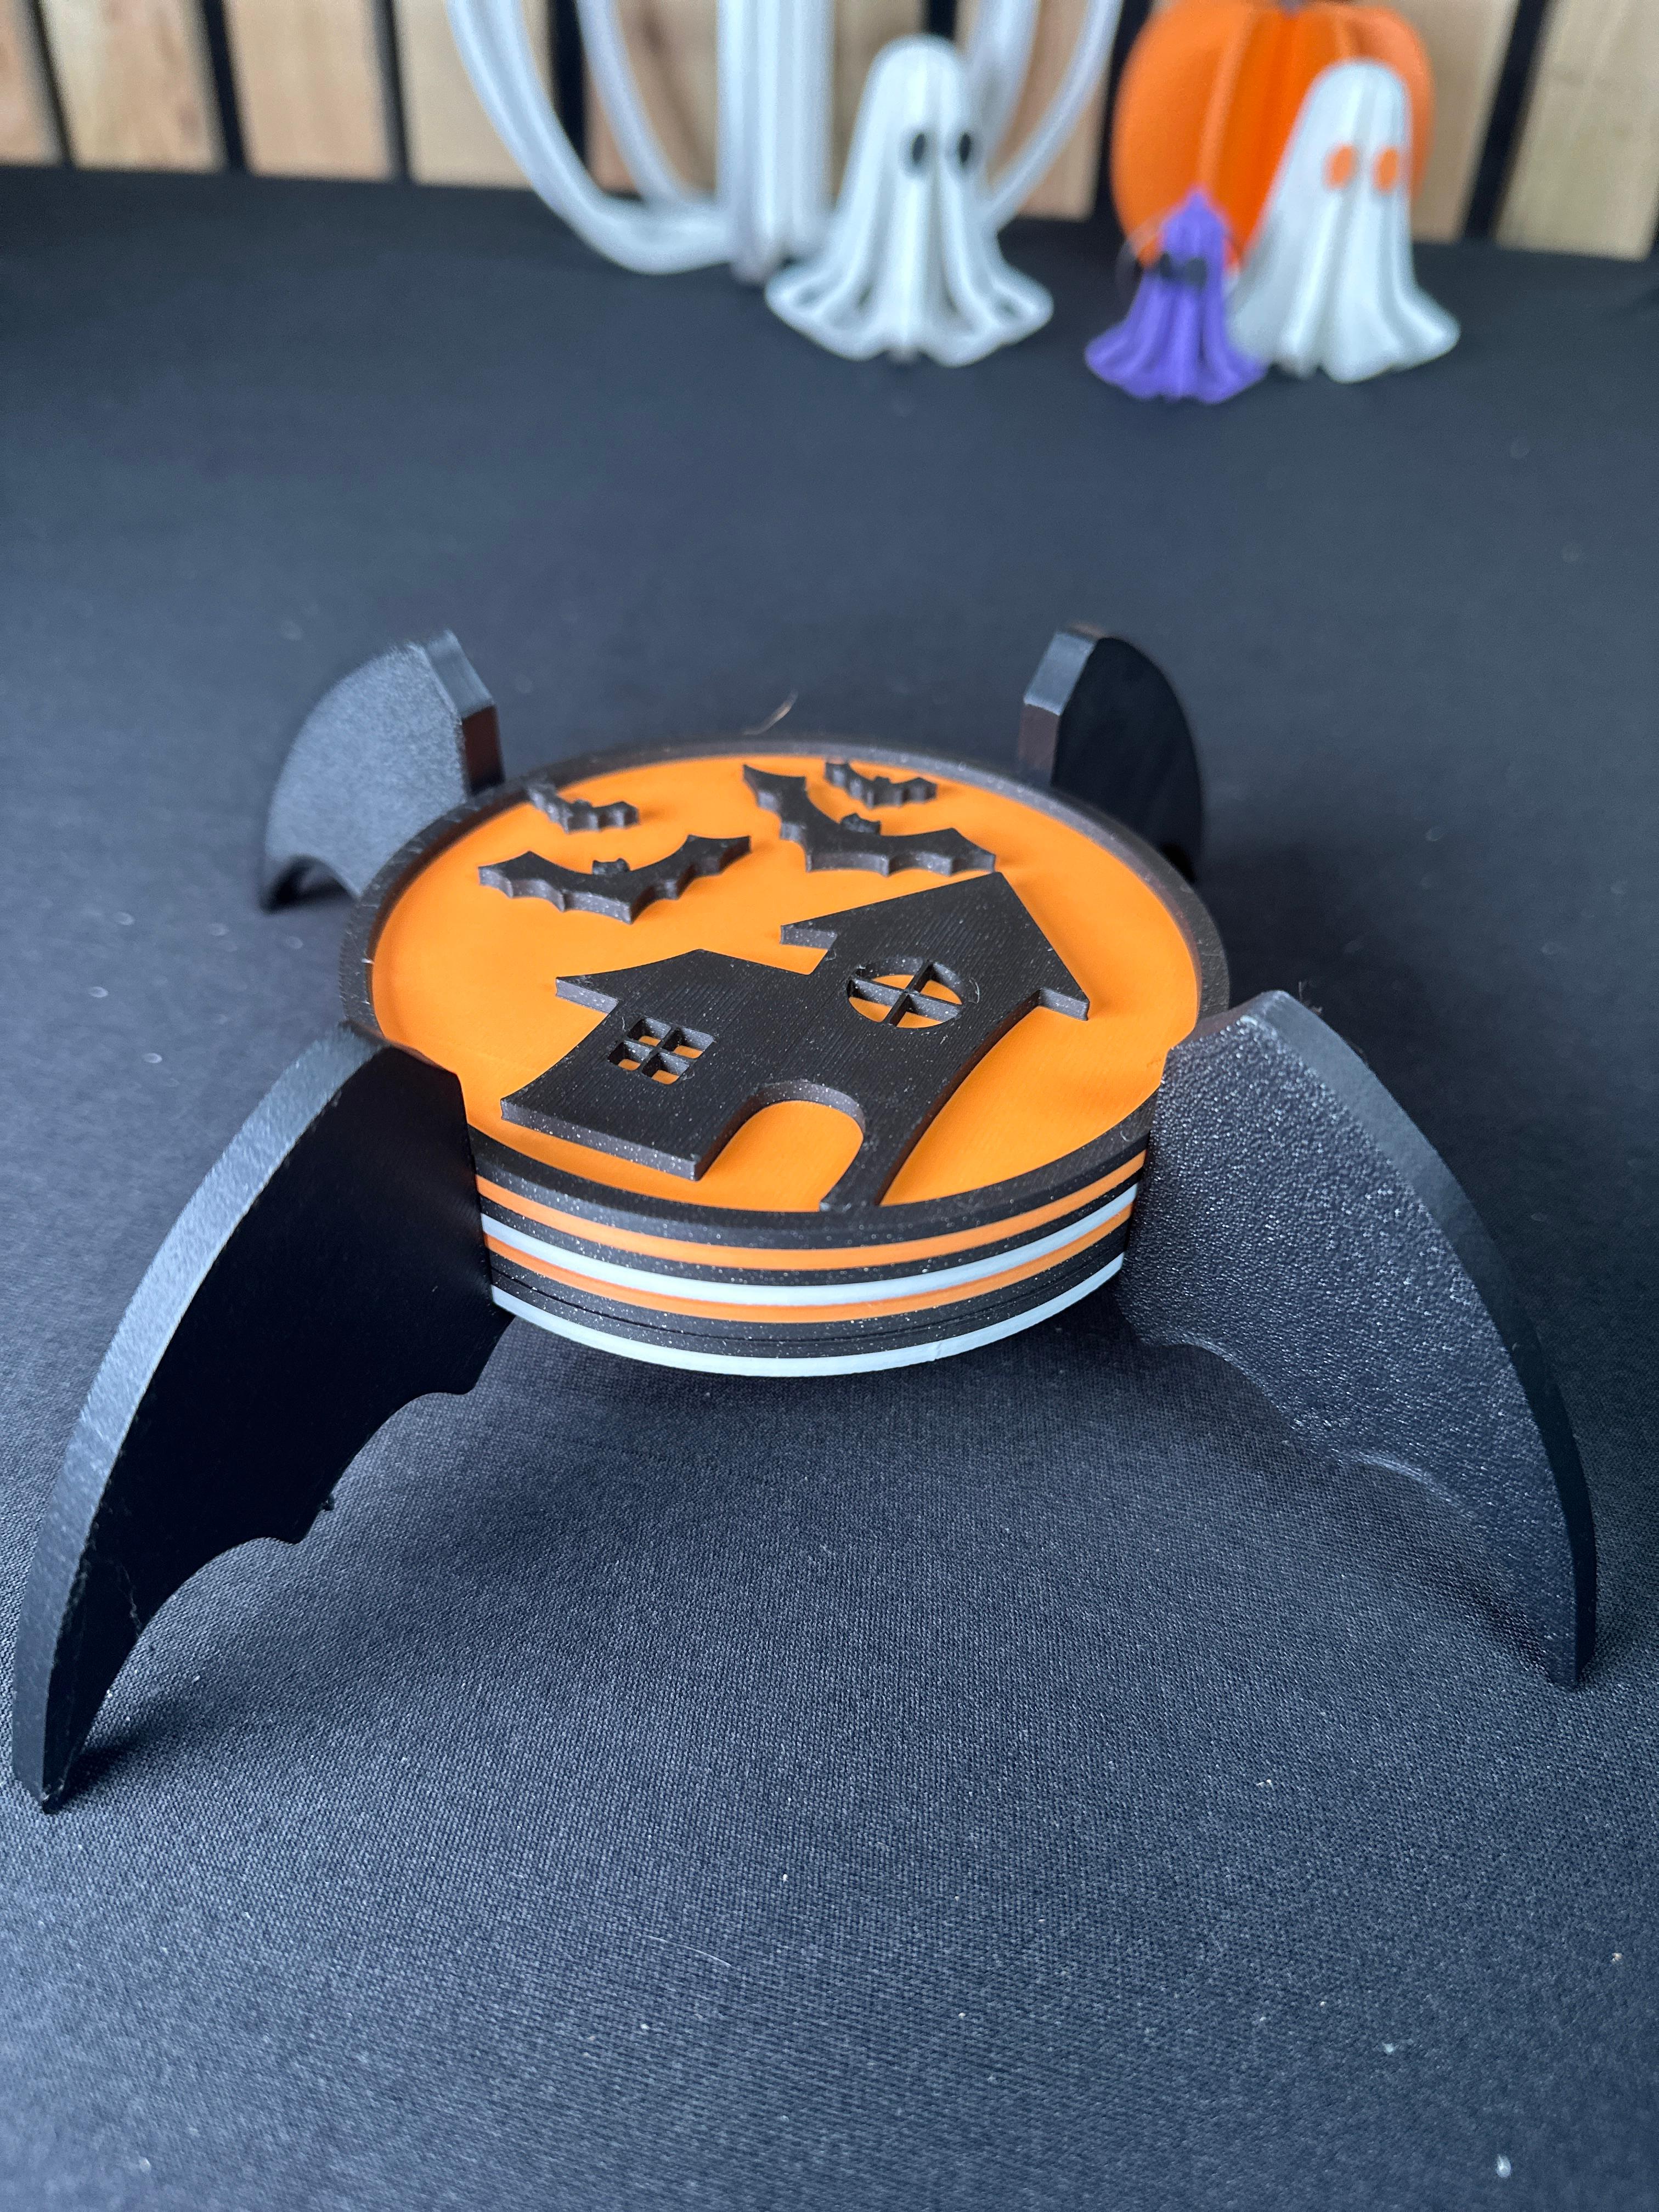 Bat Wing Coaster Holder 3d model